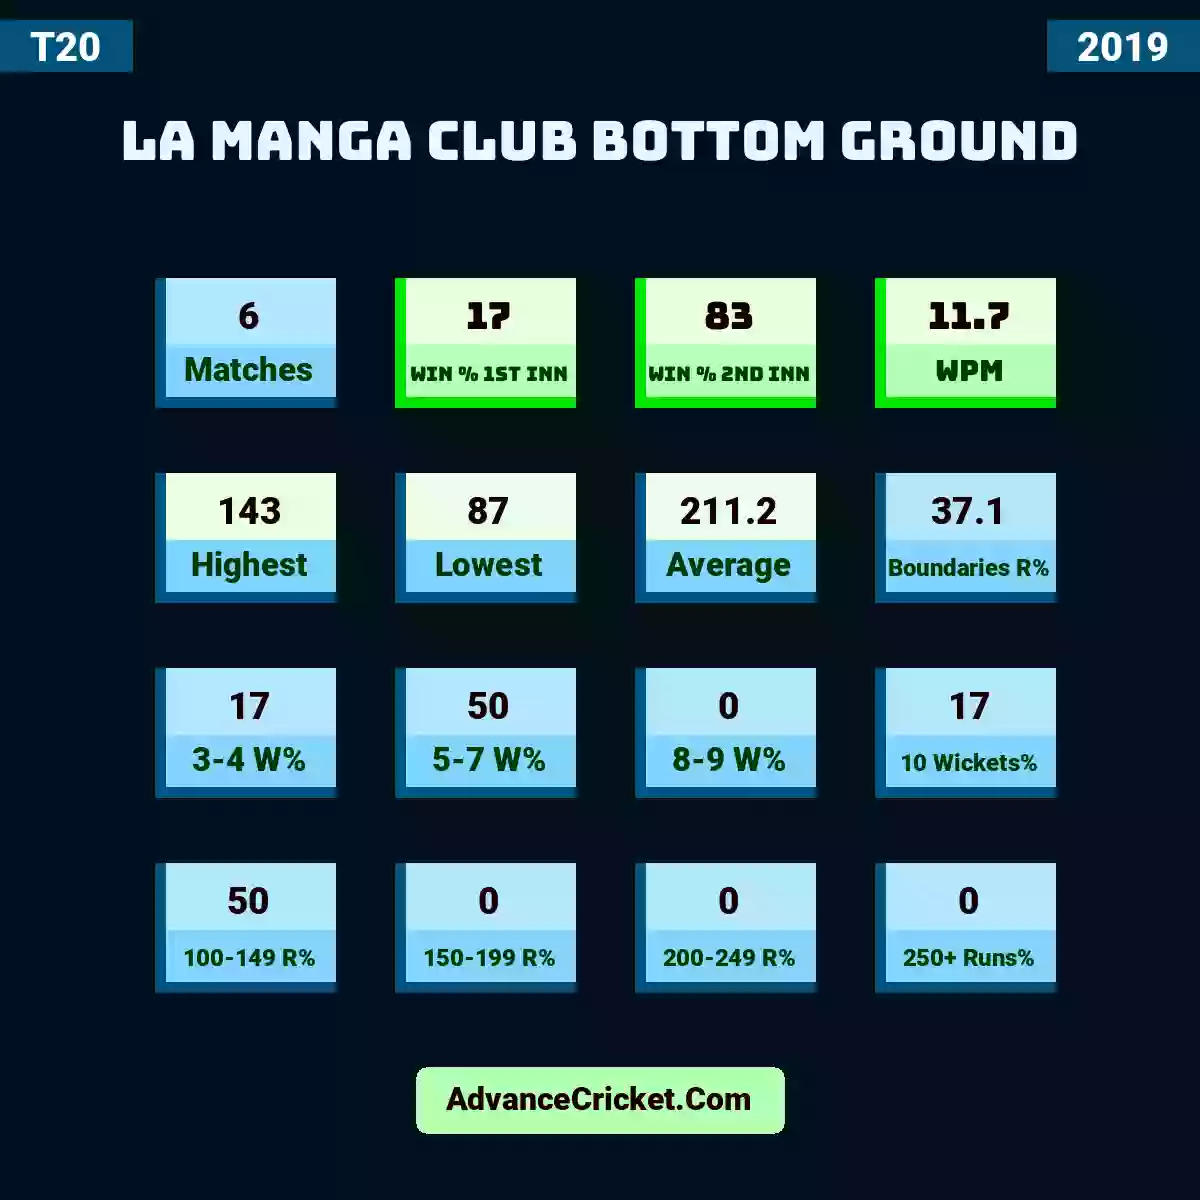 Image showing La Manga Club Bottom Ground with Matches: 6, Win % 1st Inn: 17, Win % 2nd Inn: 83, WPM: 11.7, Highest: 143, Lowest: 87, Average: 211.2, Boundaries R%: 37.1, 3-4 W%: 17, 5-7 W%: 50, 8-9 W%: 0, 10 Wickets%: 17, 100-149 R%: 50, 150-199 R%: 0, 200-249 R%: 0, 250+ Runs%: 0.